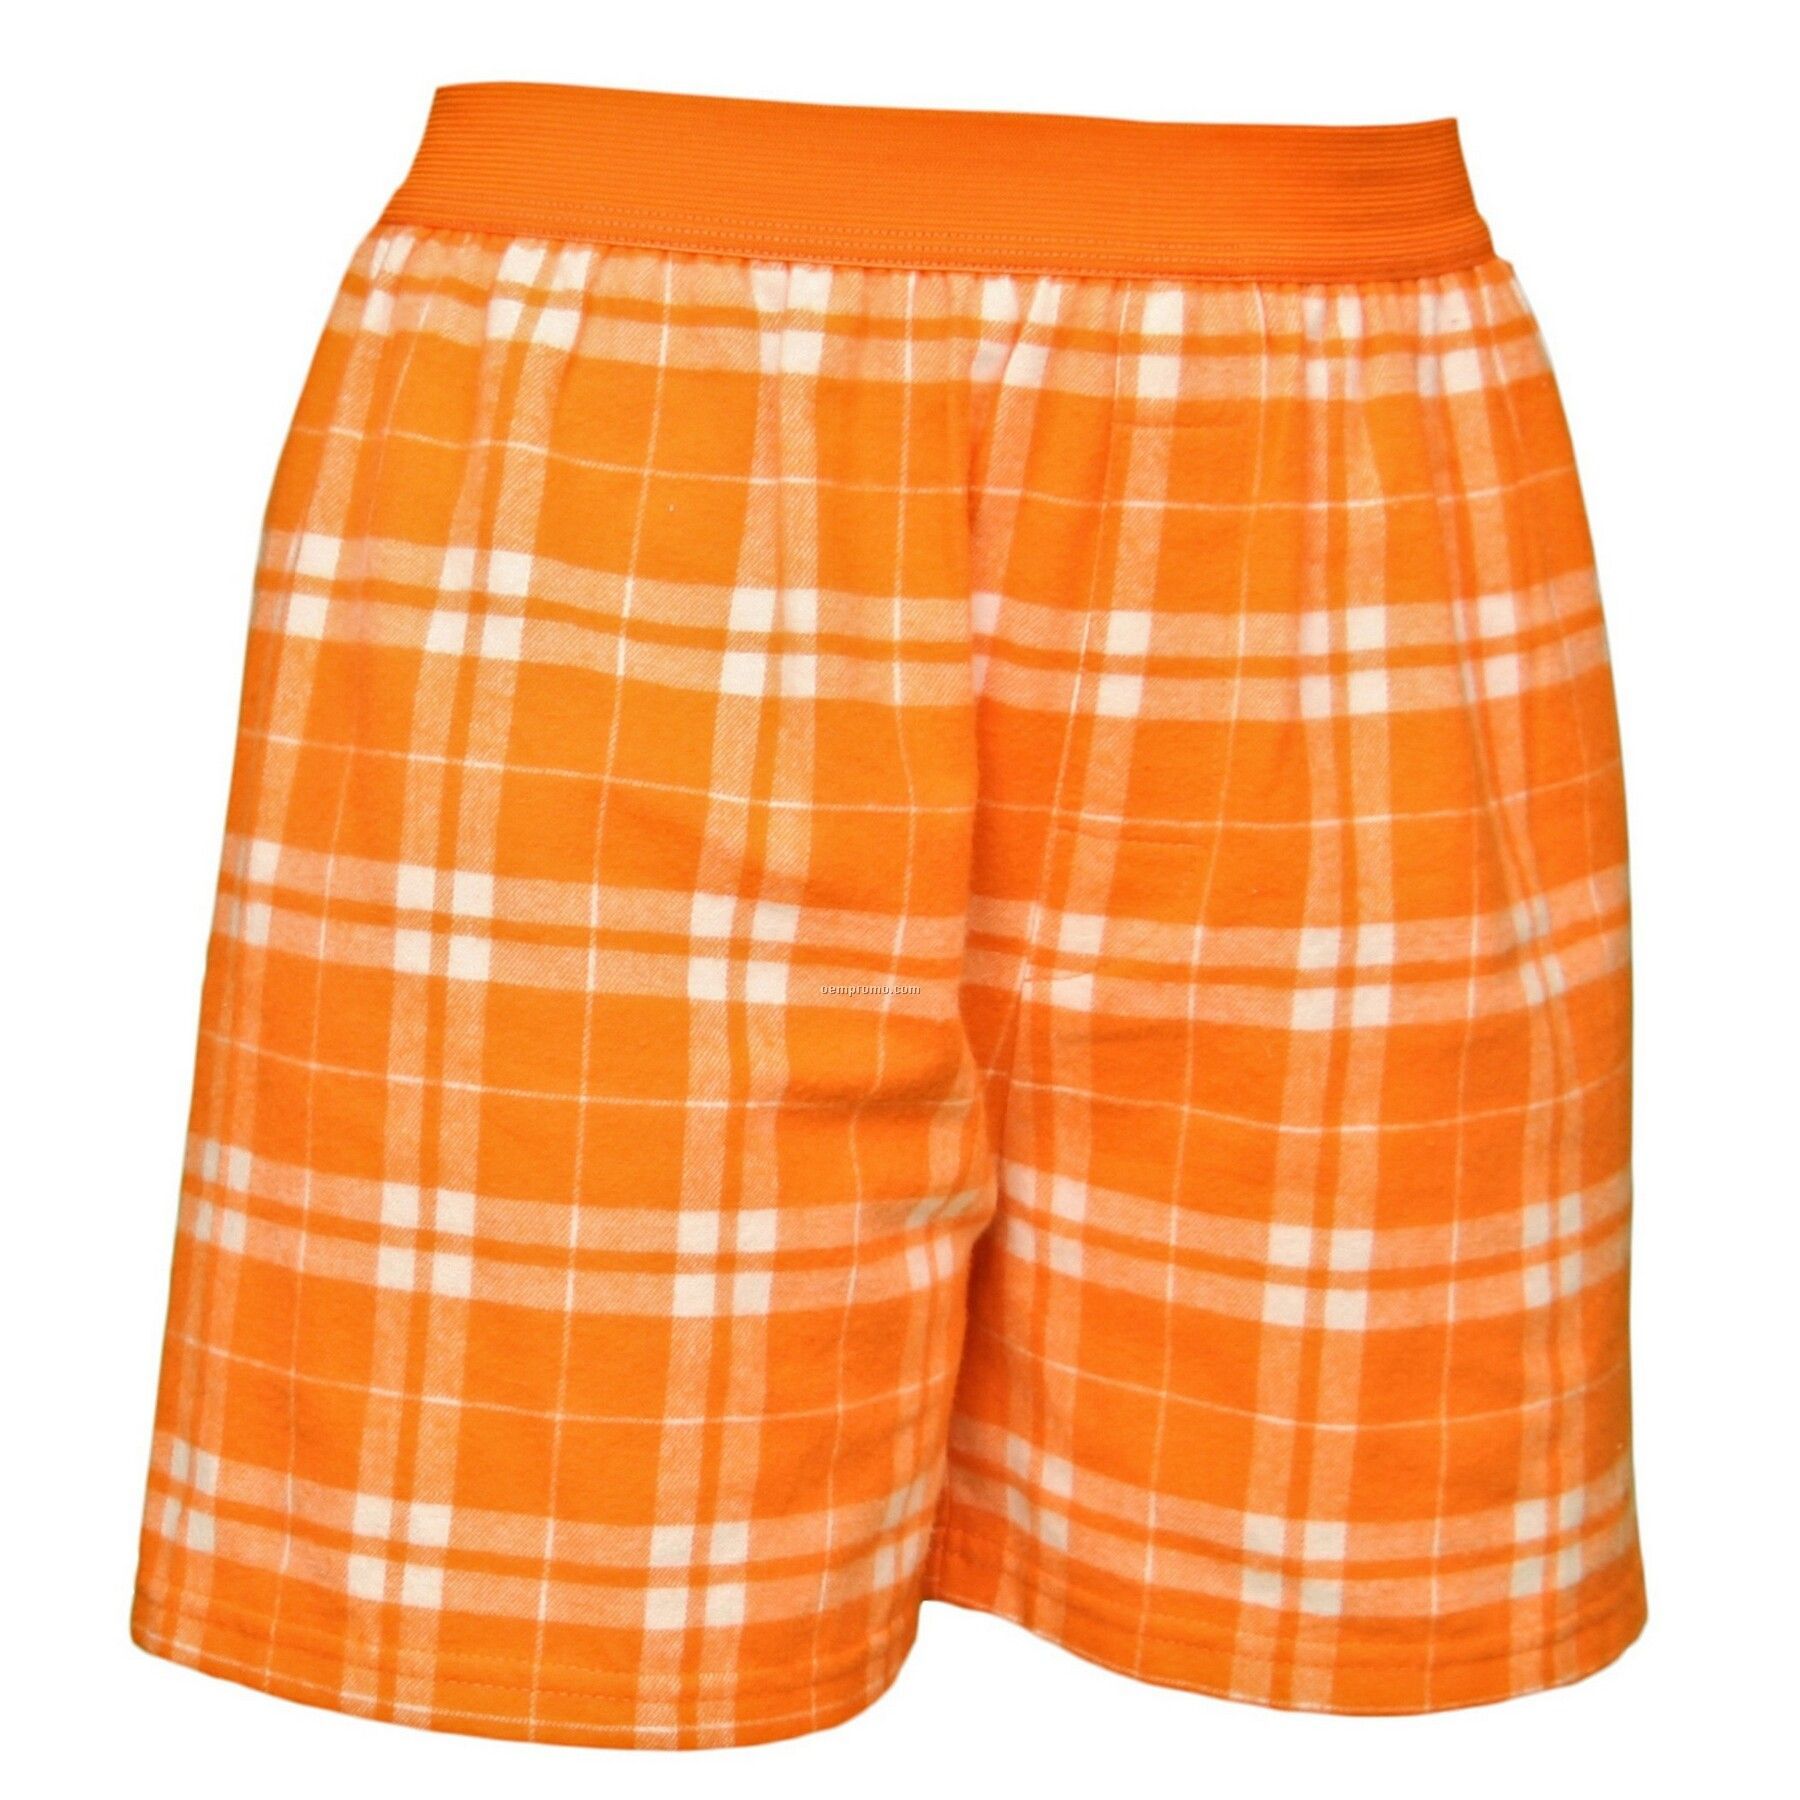 Adult Orange/White Plaid Classic Boxer Short